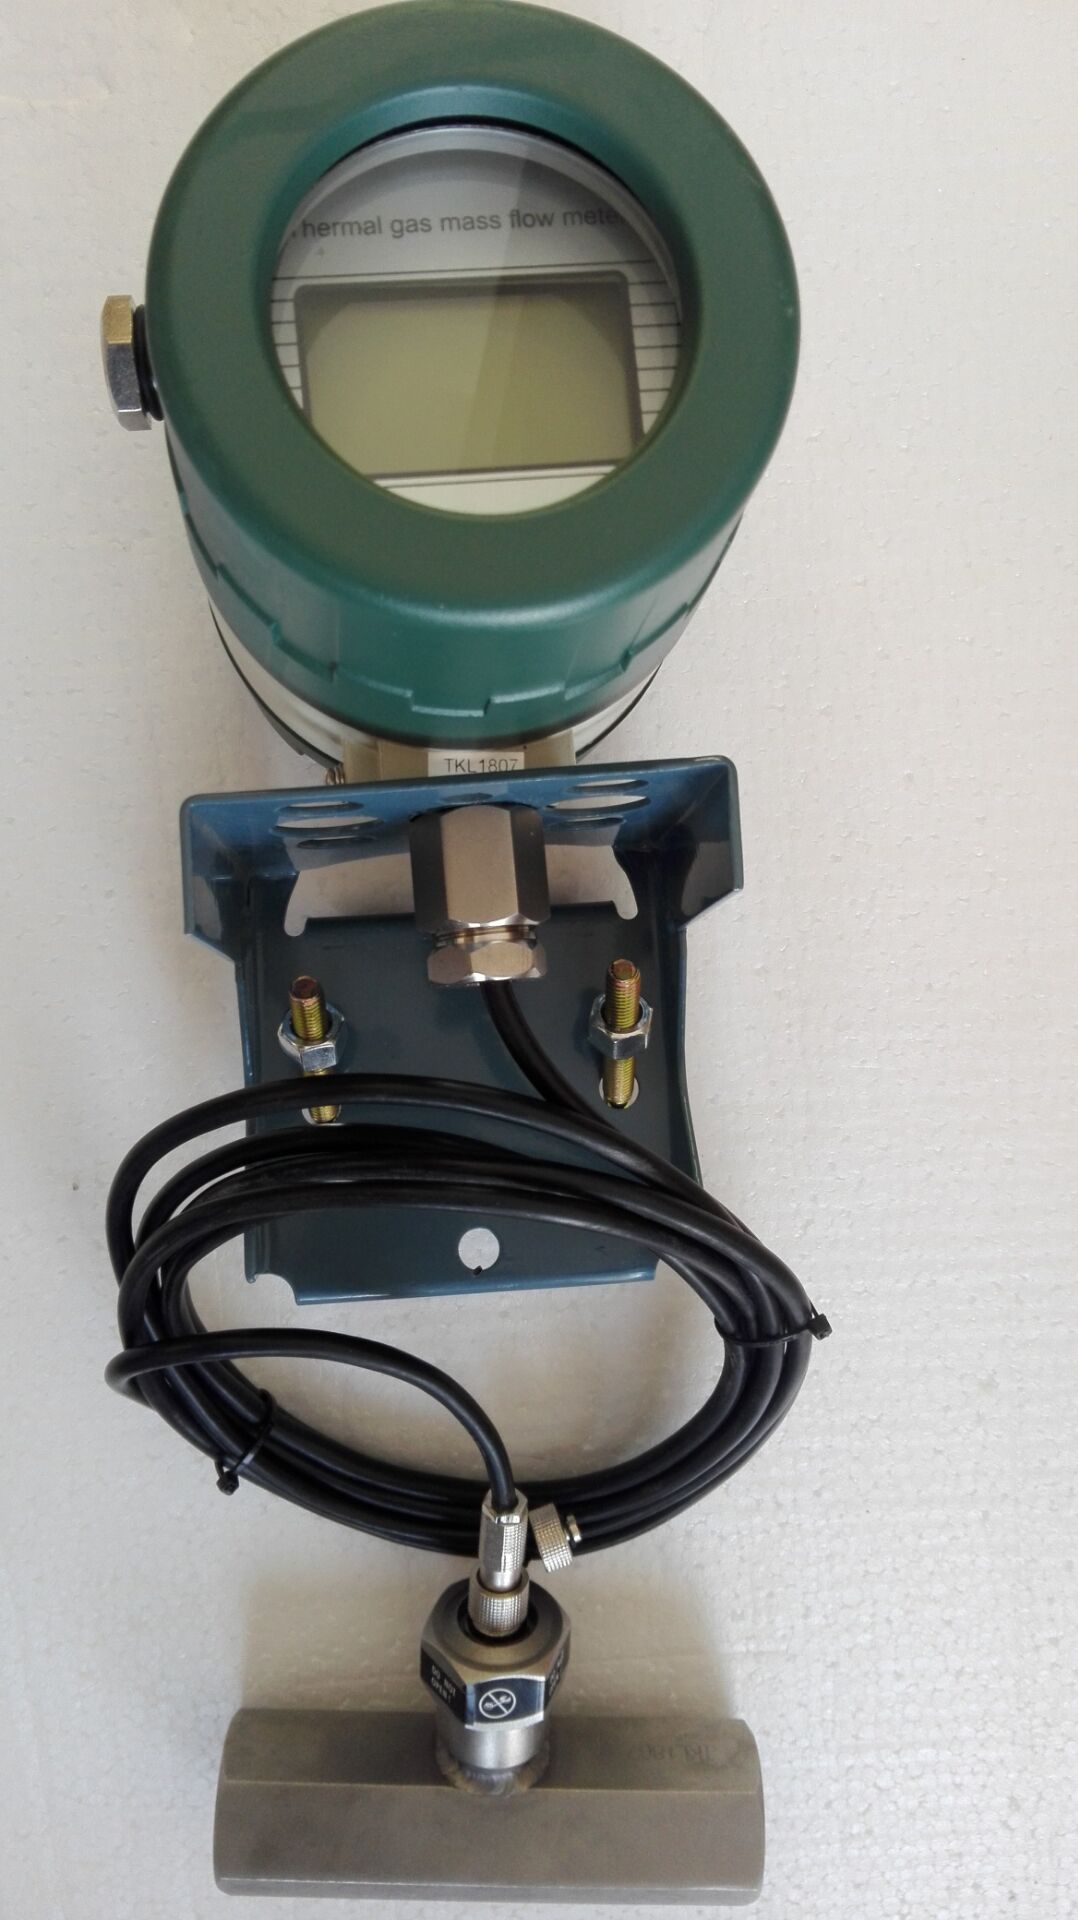 Thermal gas flow meter with remote display